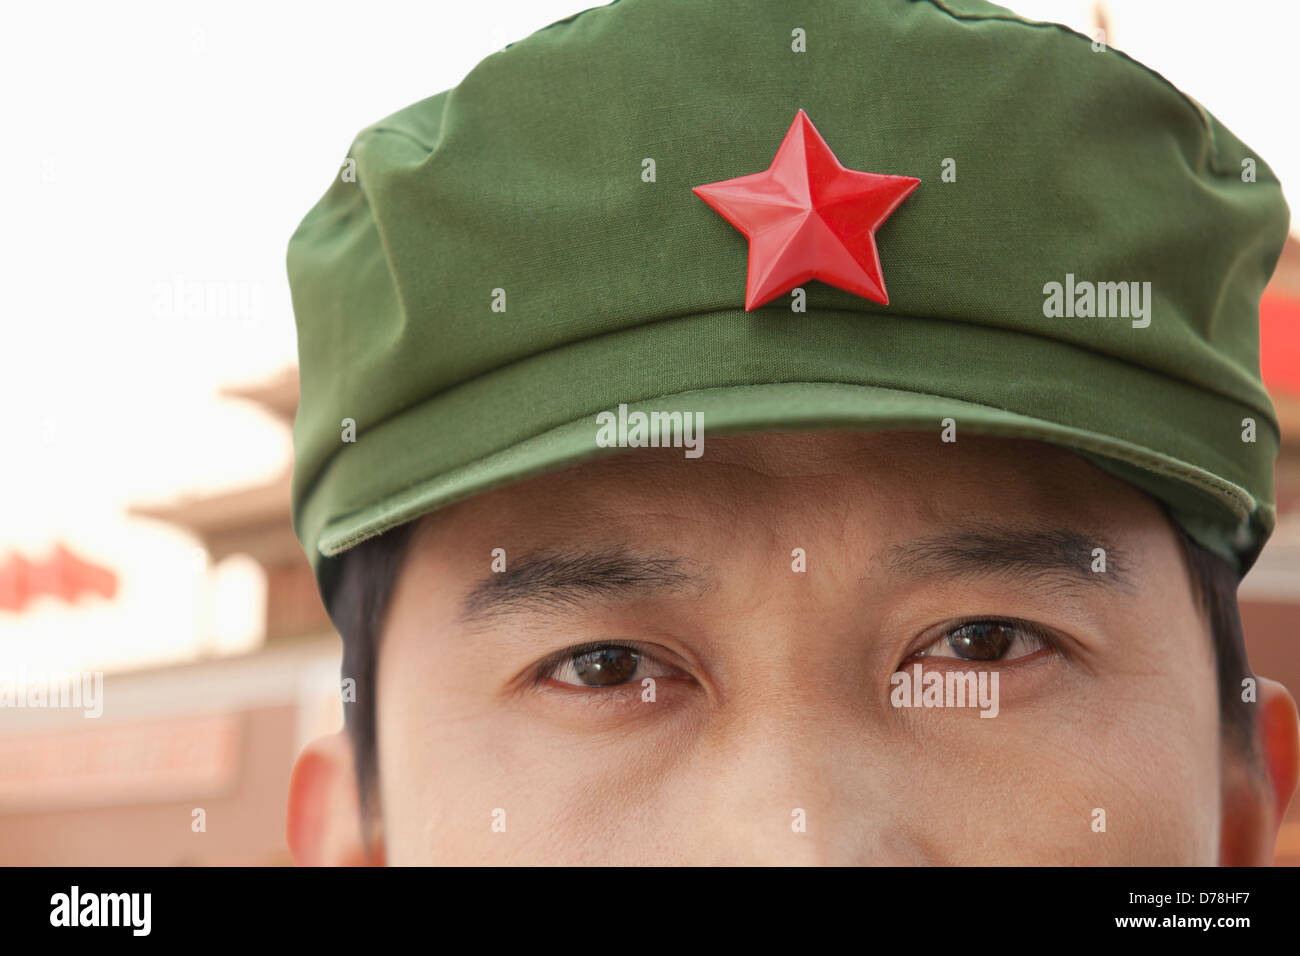 Gorra de estrella roja china fotografías e imágenes de alta resolución -  Alamy